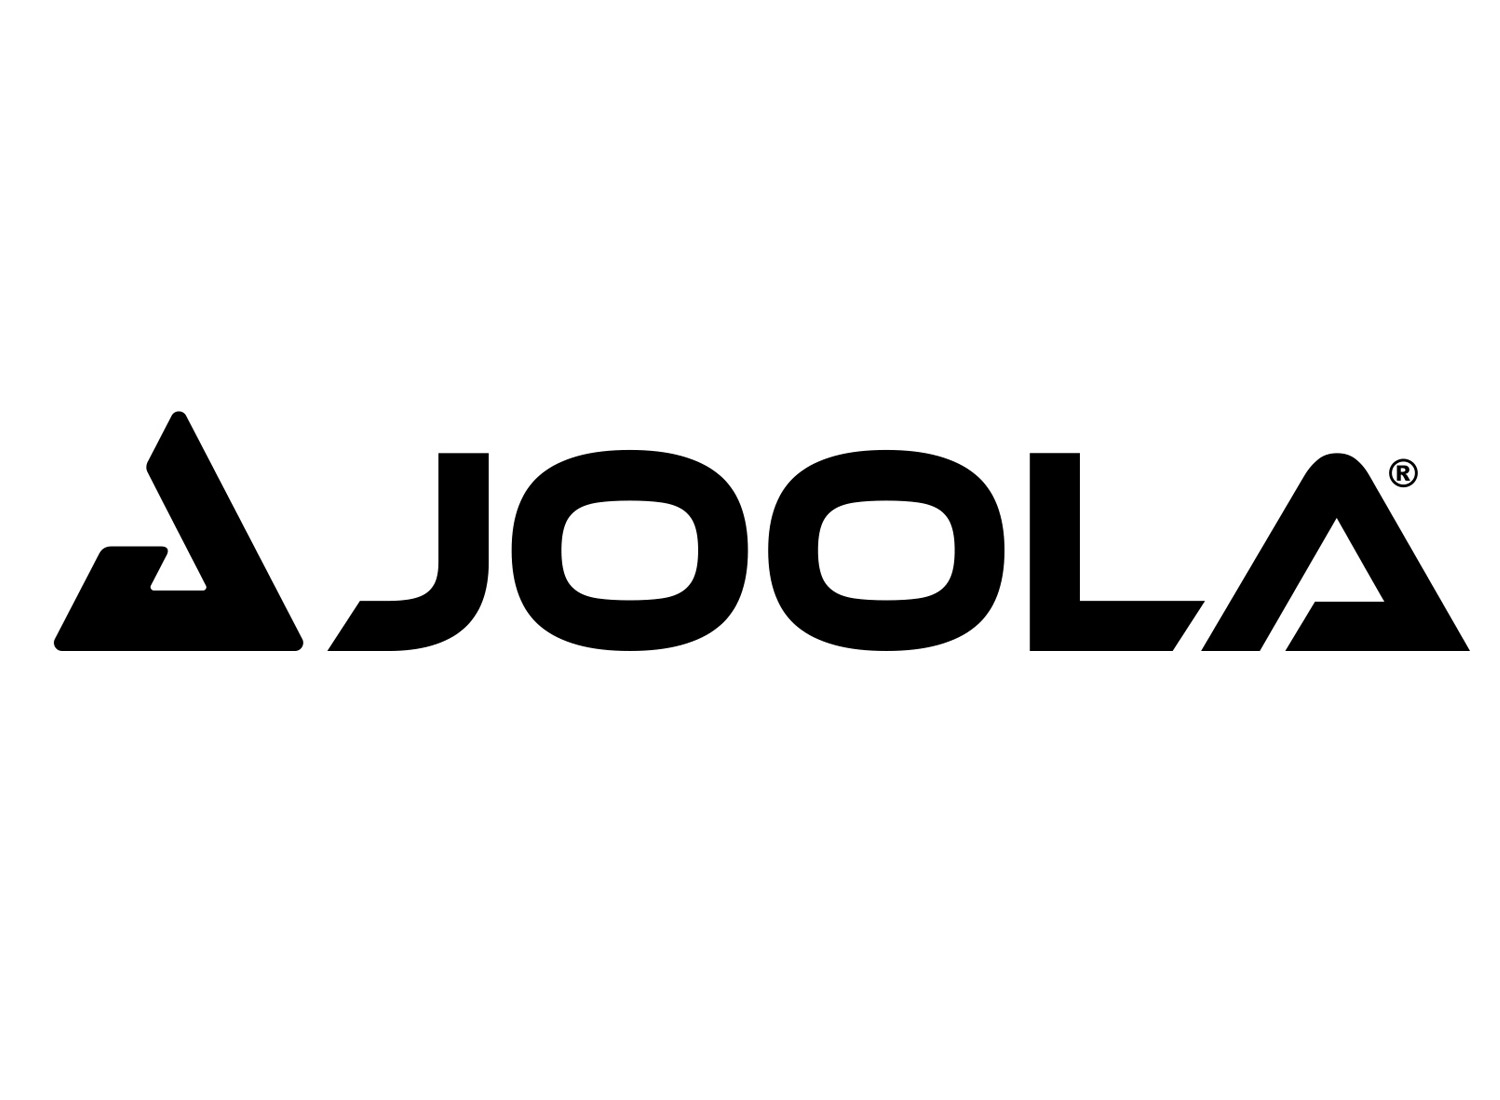 Joola Logo, Quelle: Joola